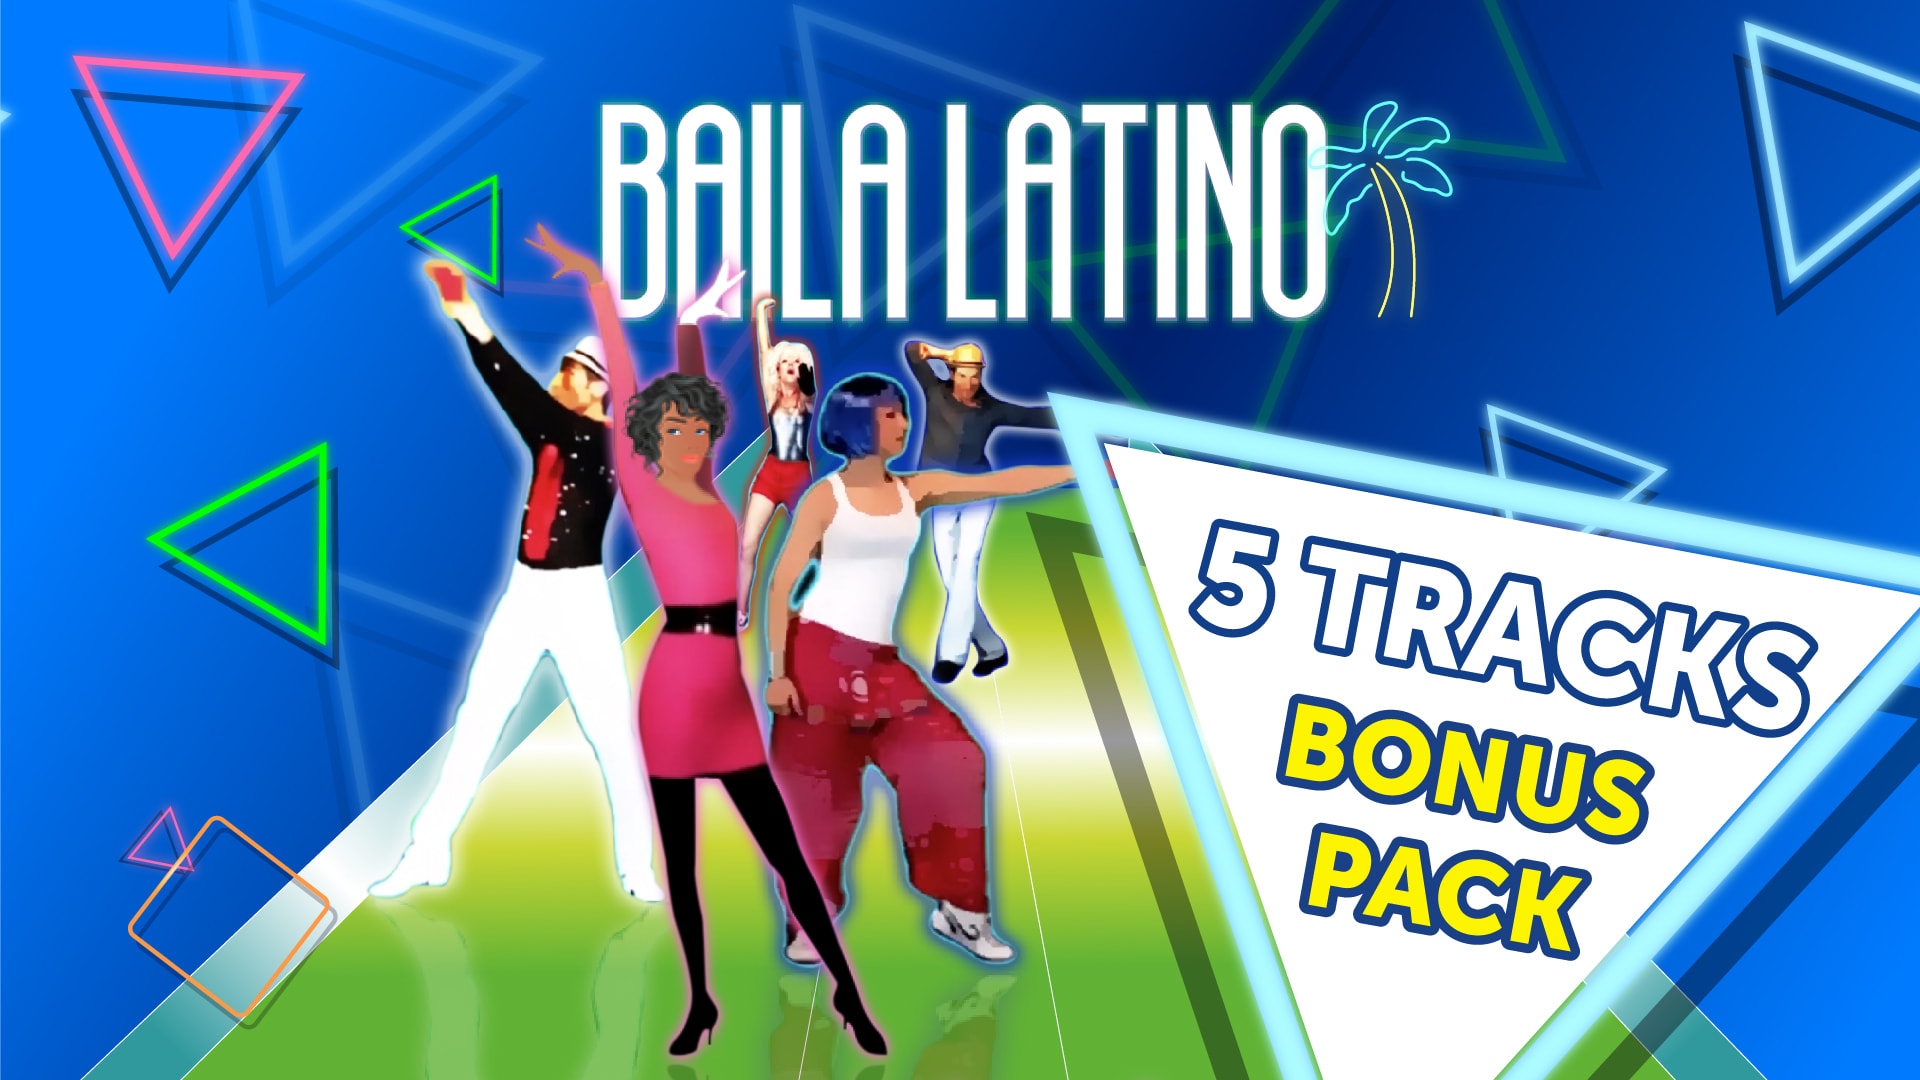 Baila Latino Bonus Pack